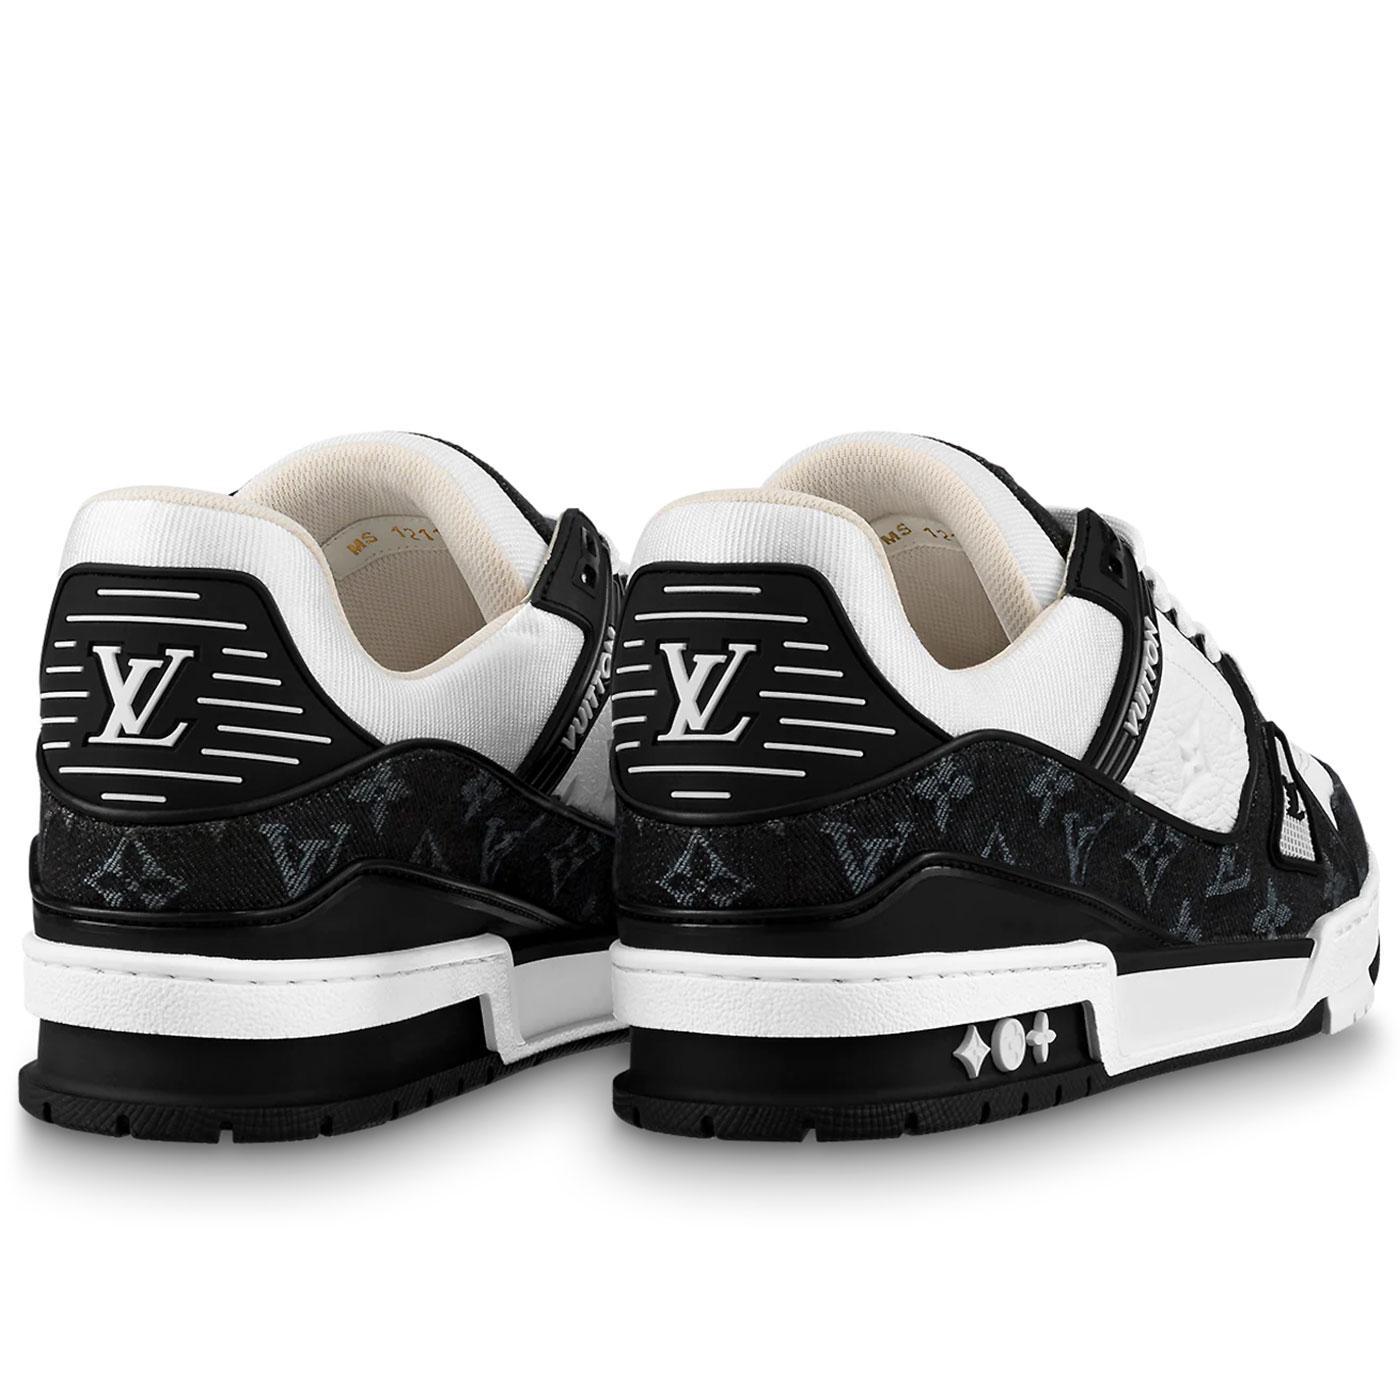 LV Trainers - Shoes 1A9JG6